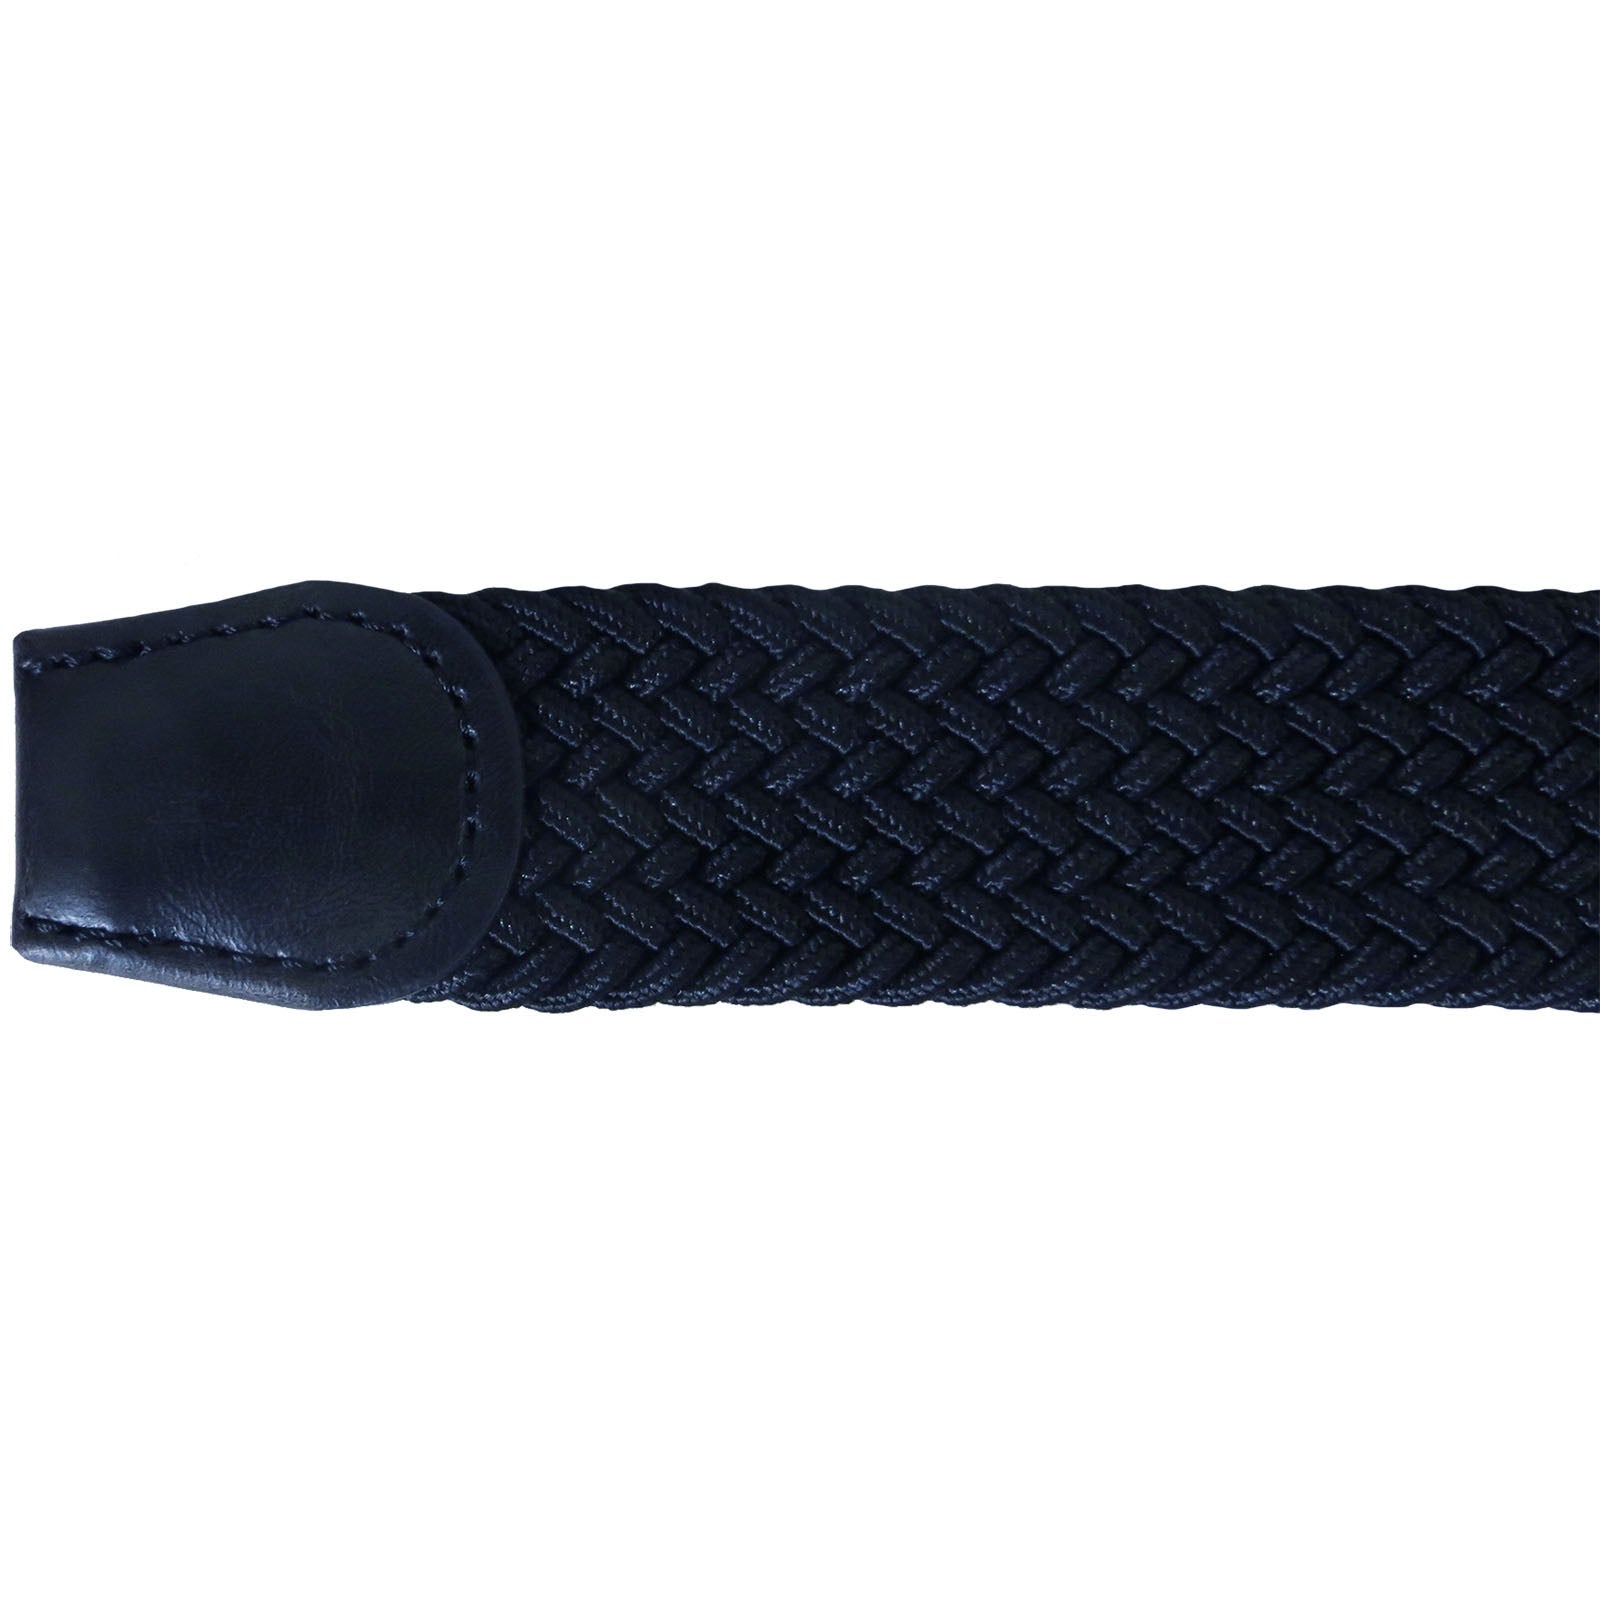 Wholesale Men's Stretch Belt in Navy Blue